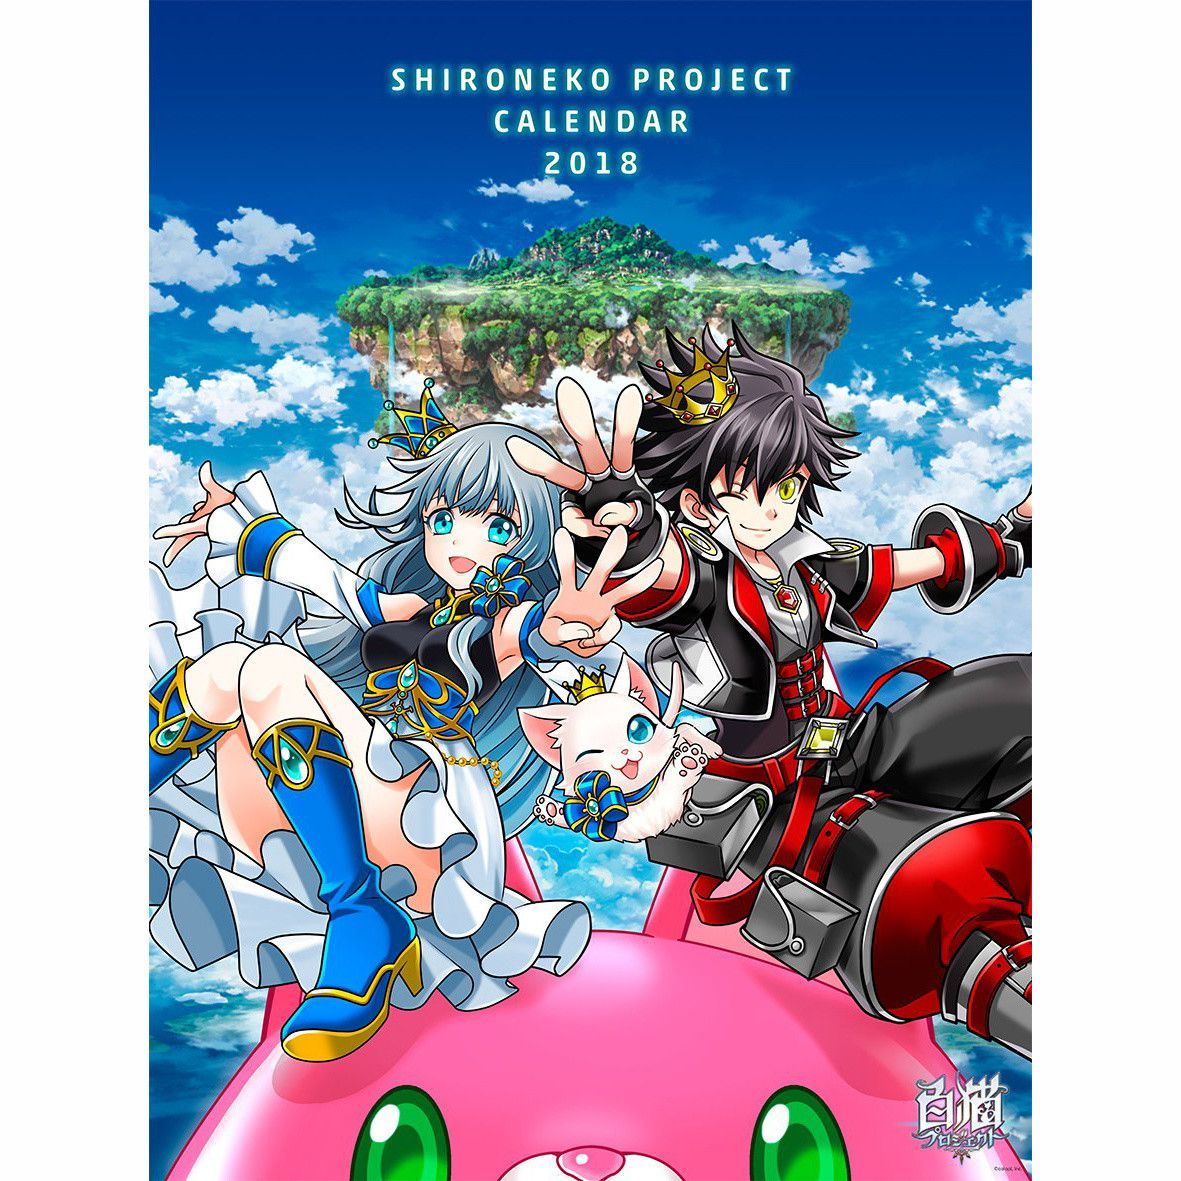 Shironeko Project Zero Chronicle Anime Fabric Wall Scroll Poster (16x23)  Inches [A] Shironeko Project ZERO-15